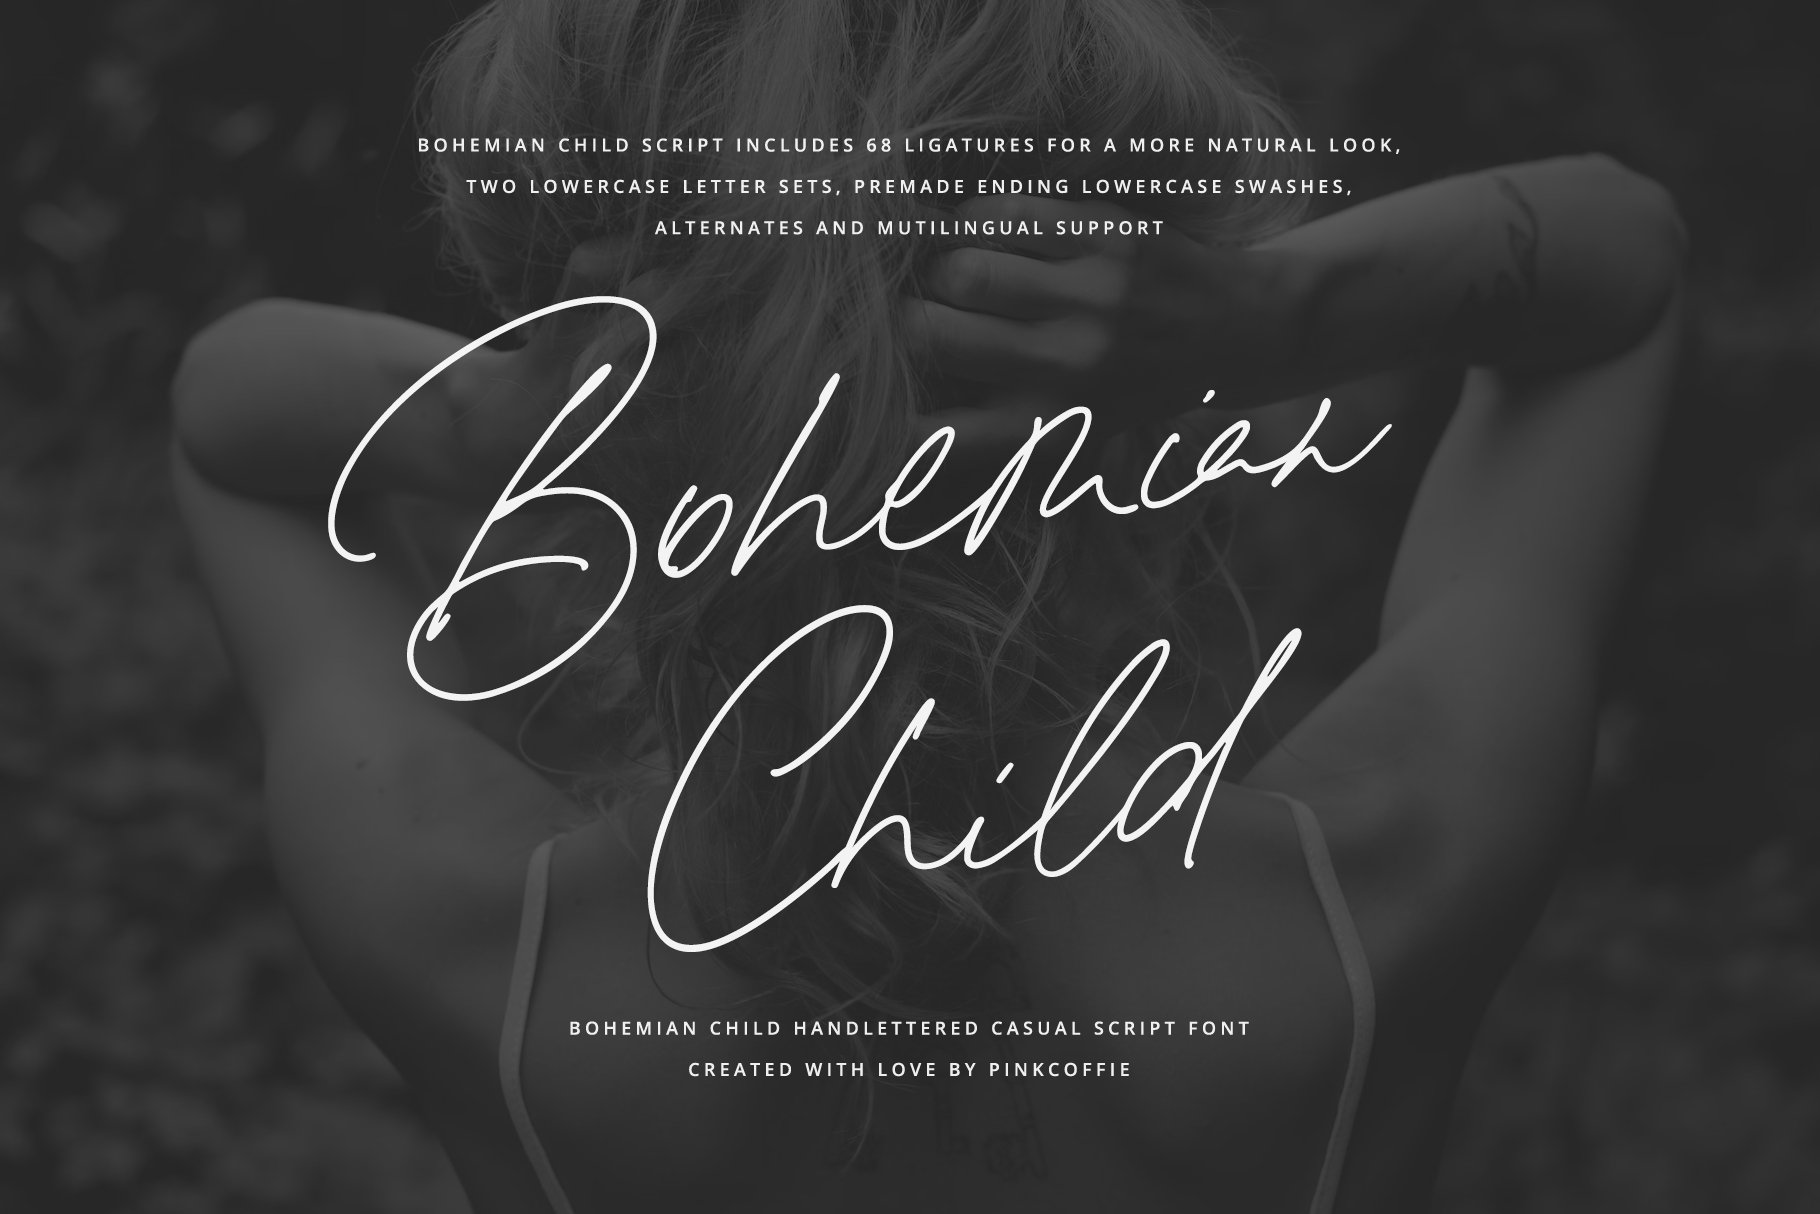 Bohemian Child | Handwritten Script cover image.